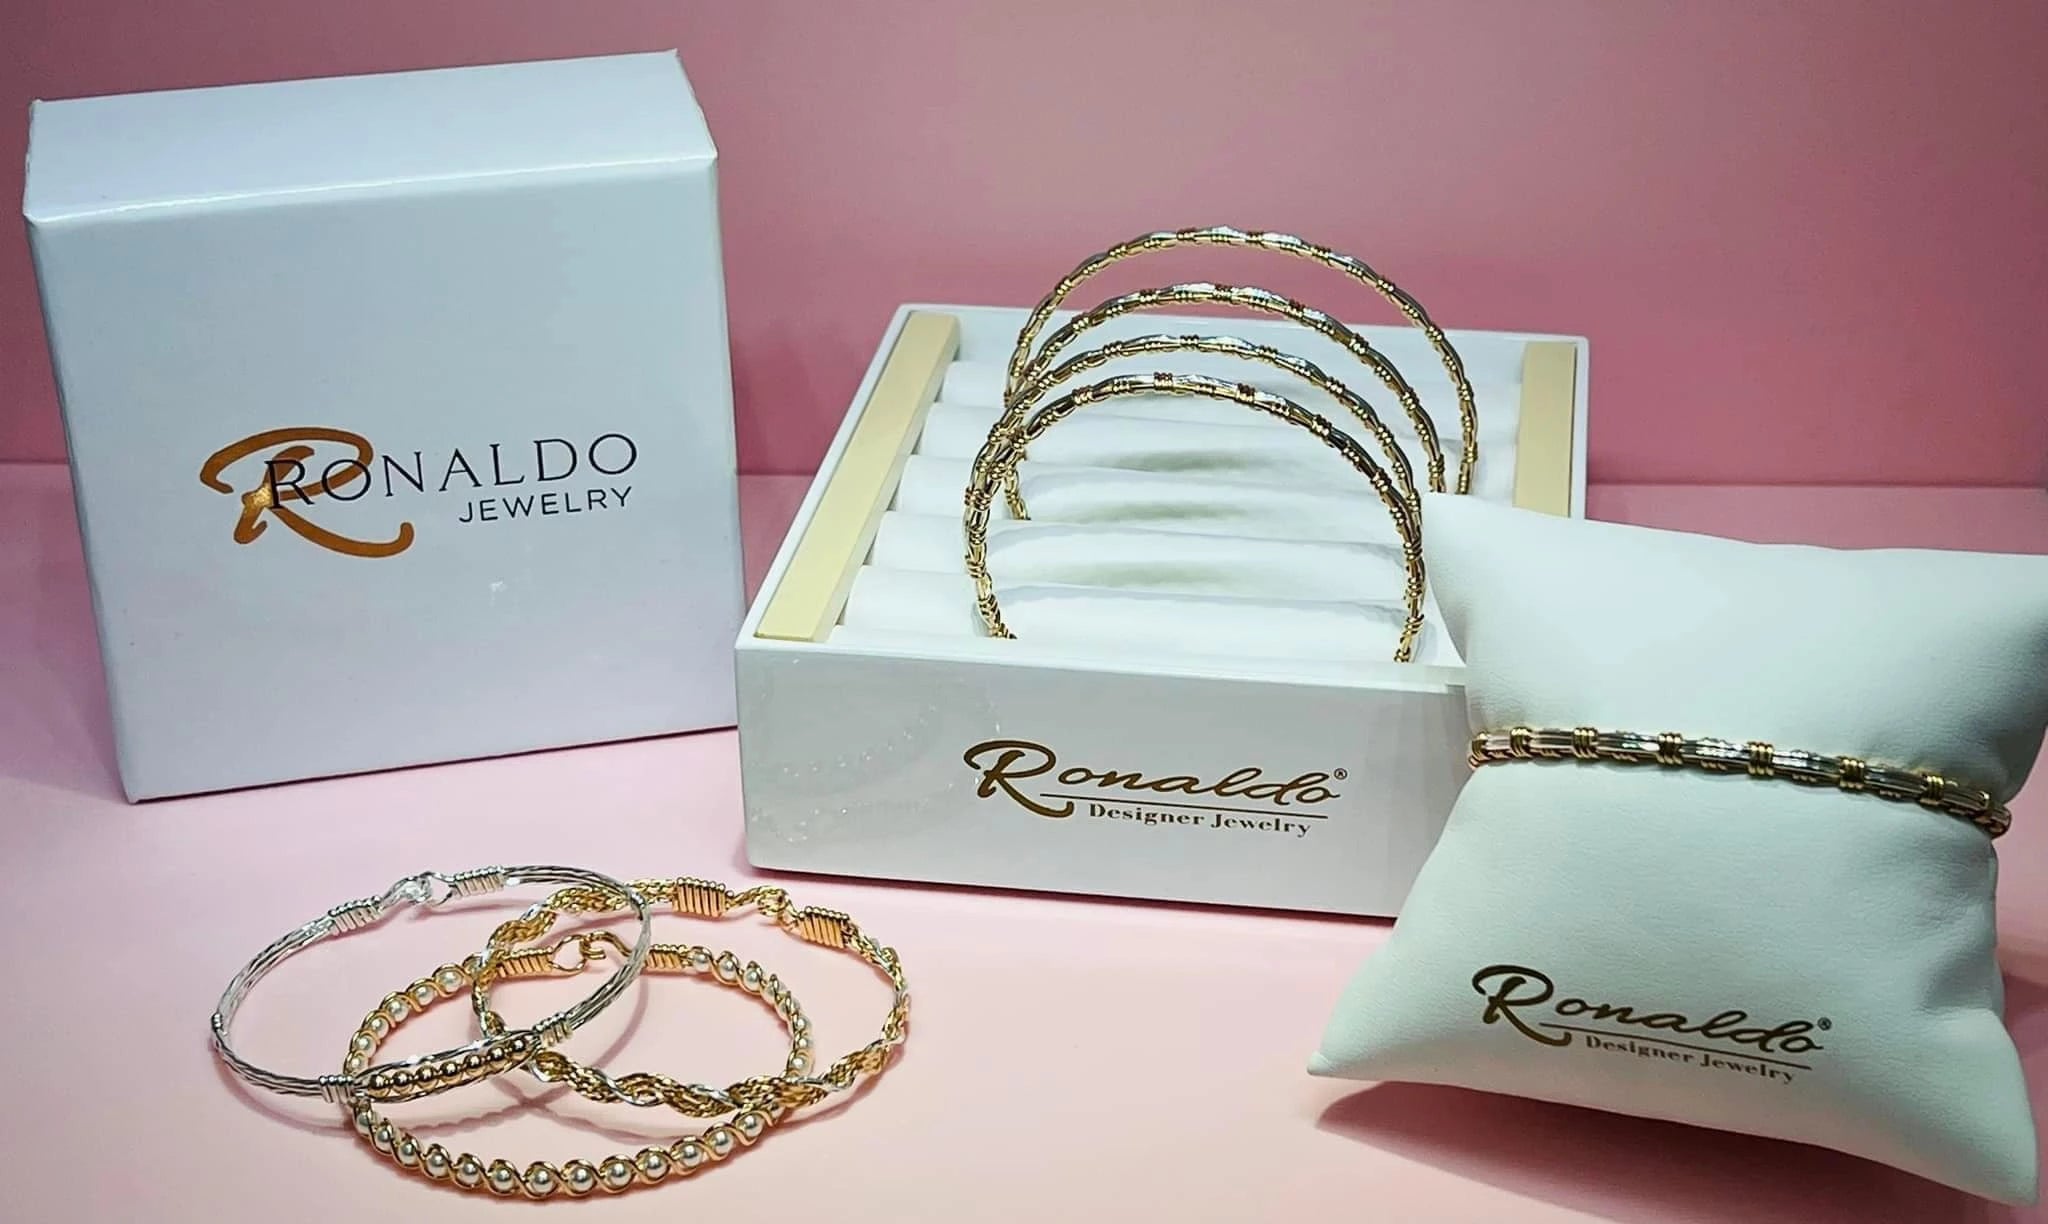 Ronaldo Jewelry